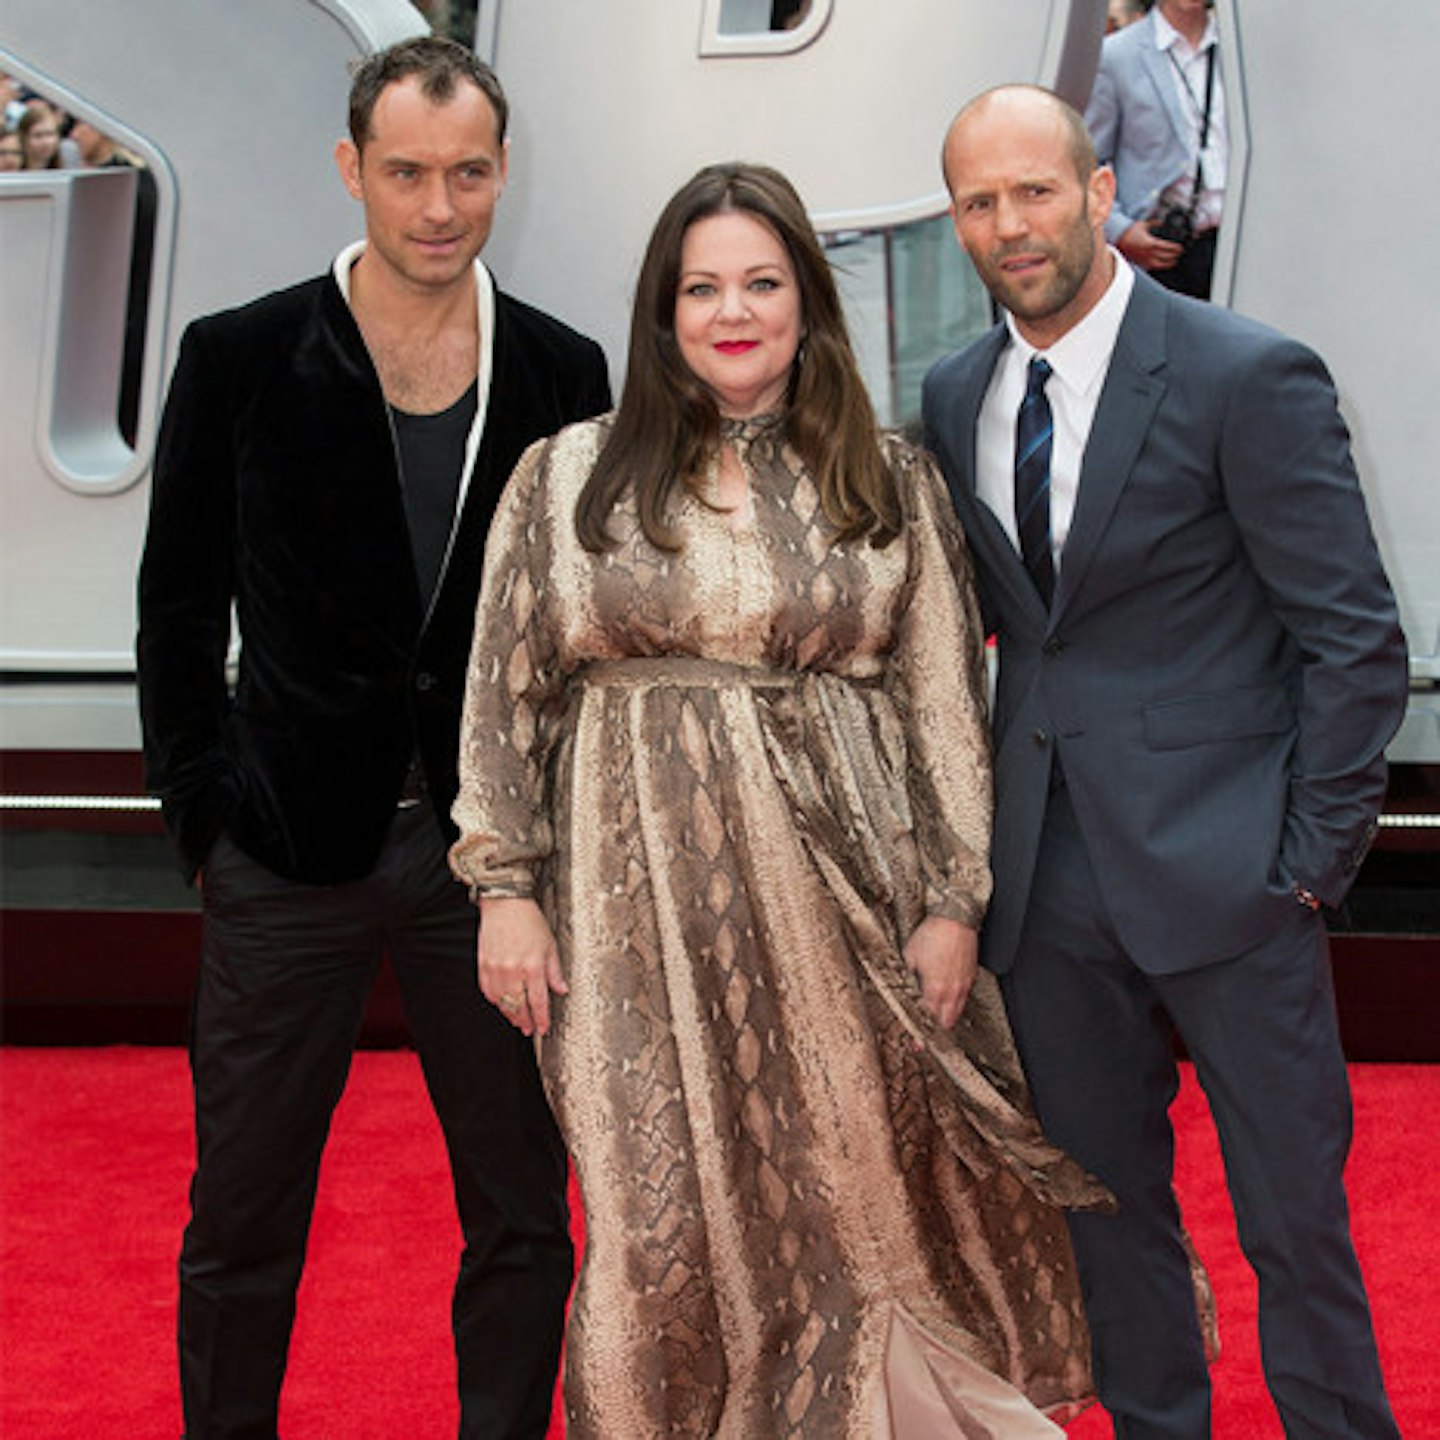 Jude with Spy co-stars Melissa McCarthy and Jason Statham